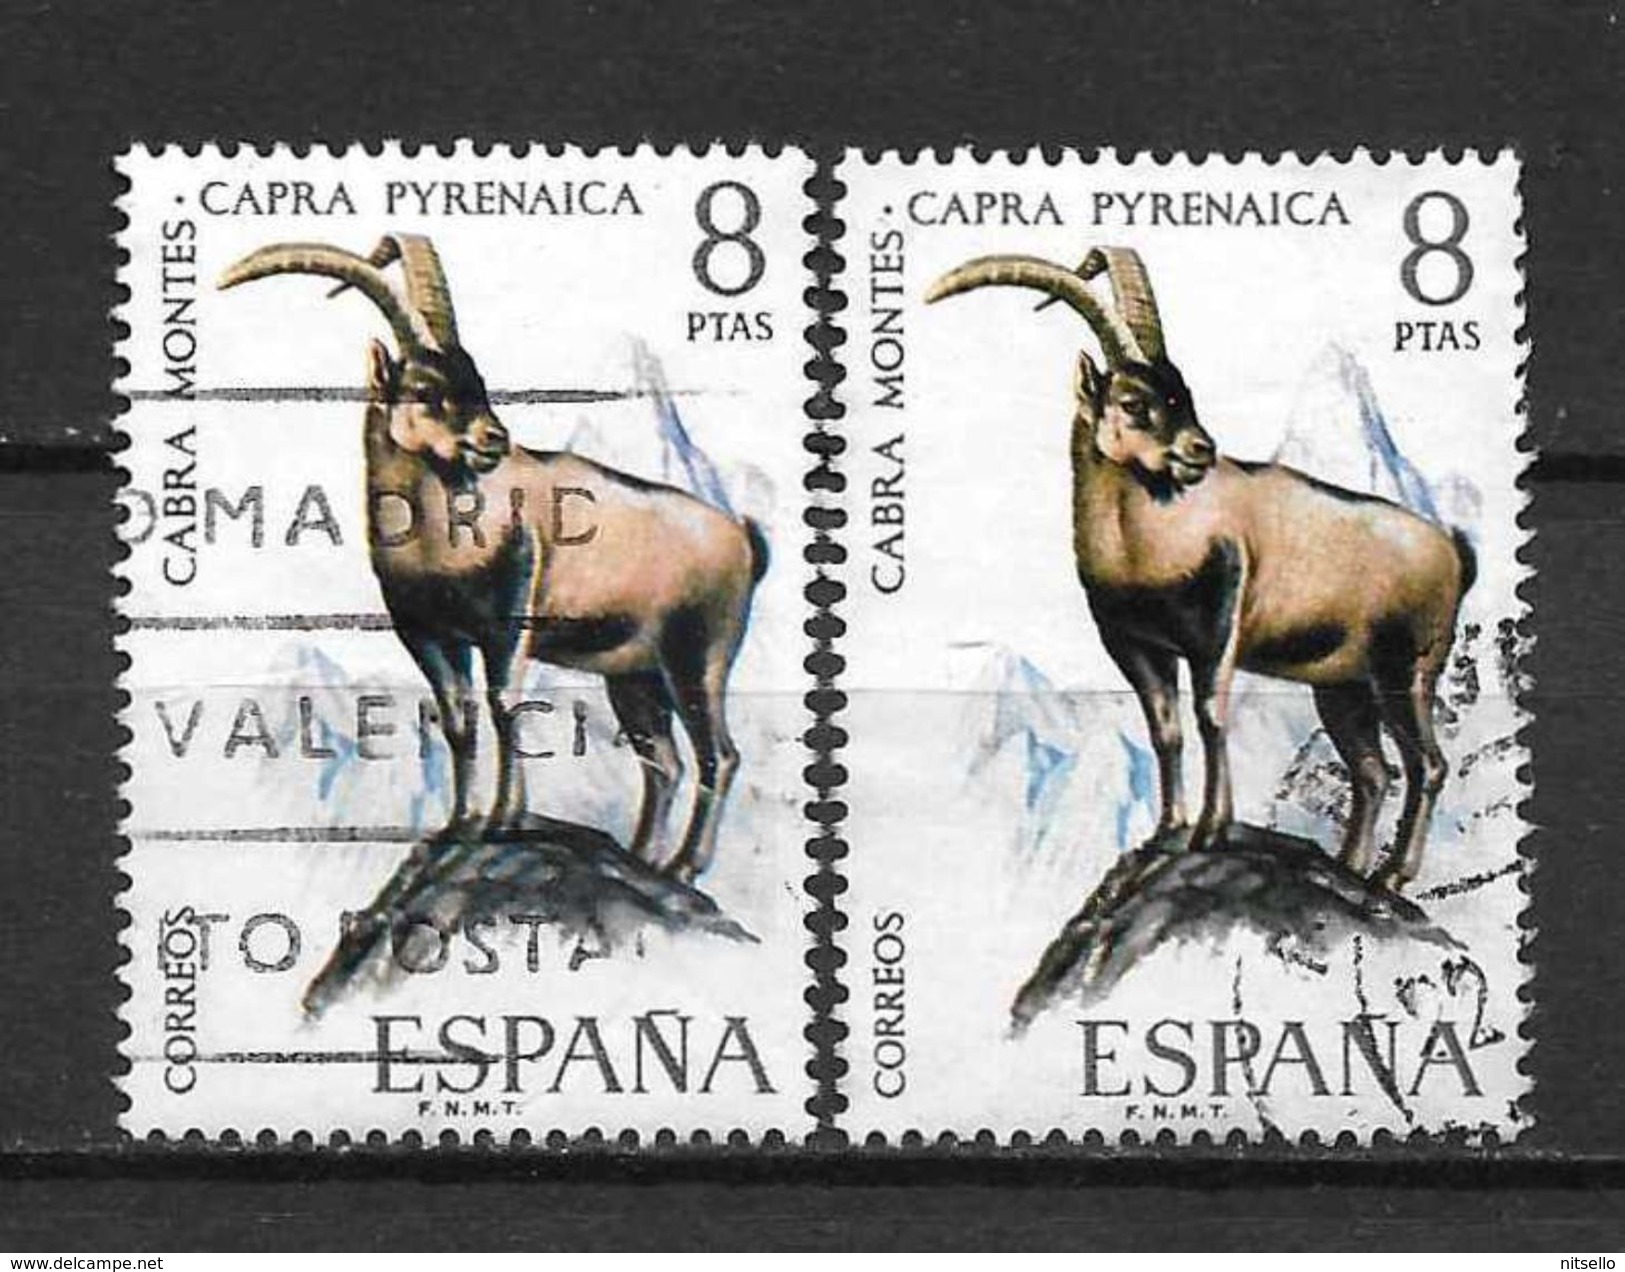 LOTE 1360 /// ESPAÑA AÑO 1971  EDIFIL Nº: 2040 X 2  SELLO CLAVE - Used Stamps